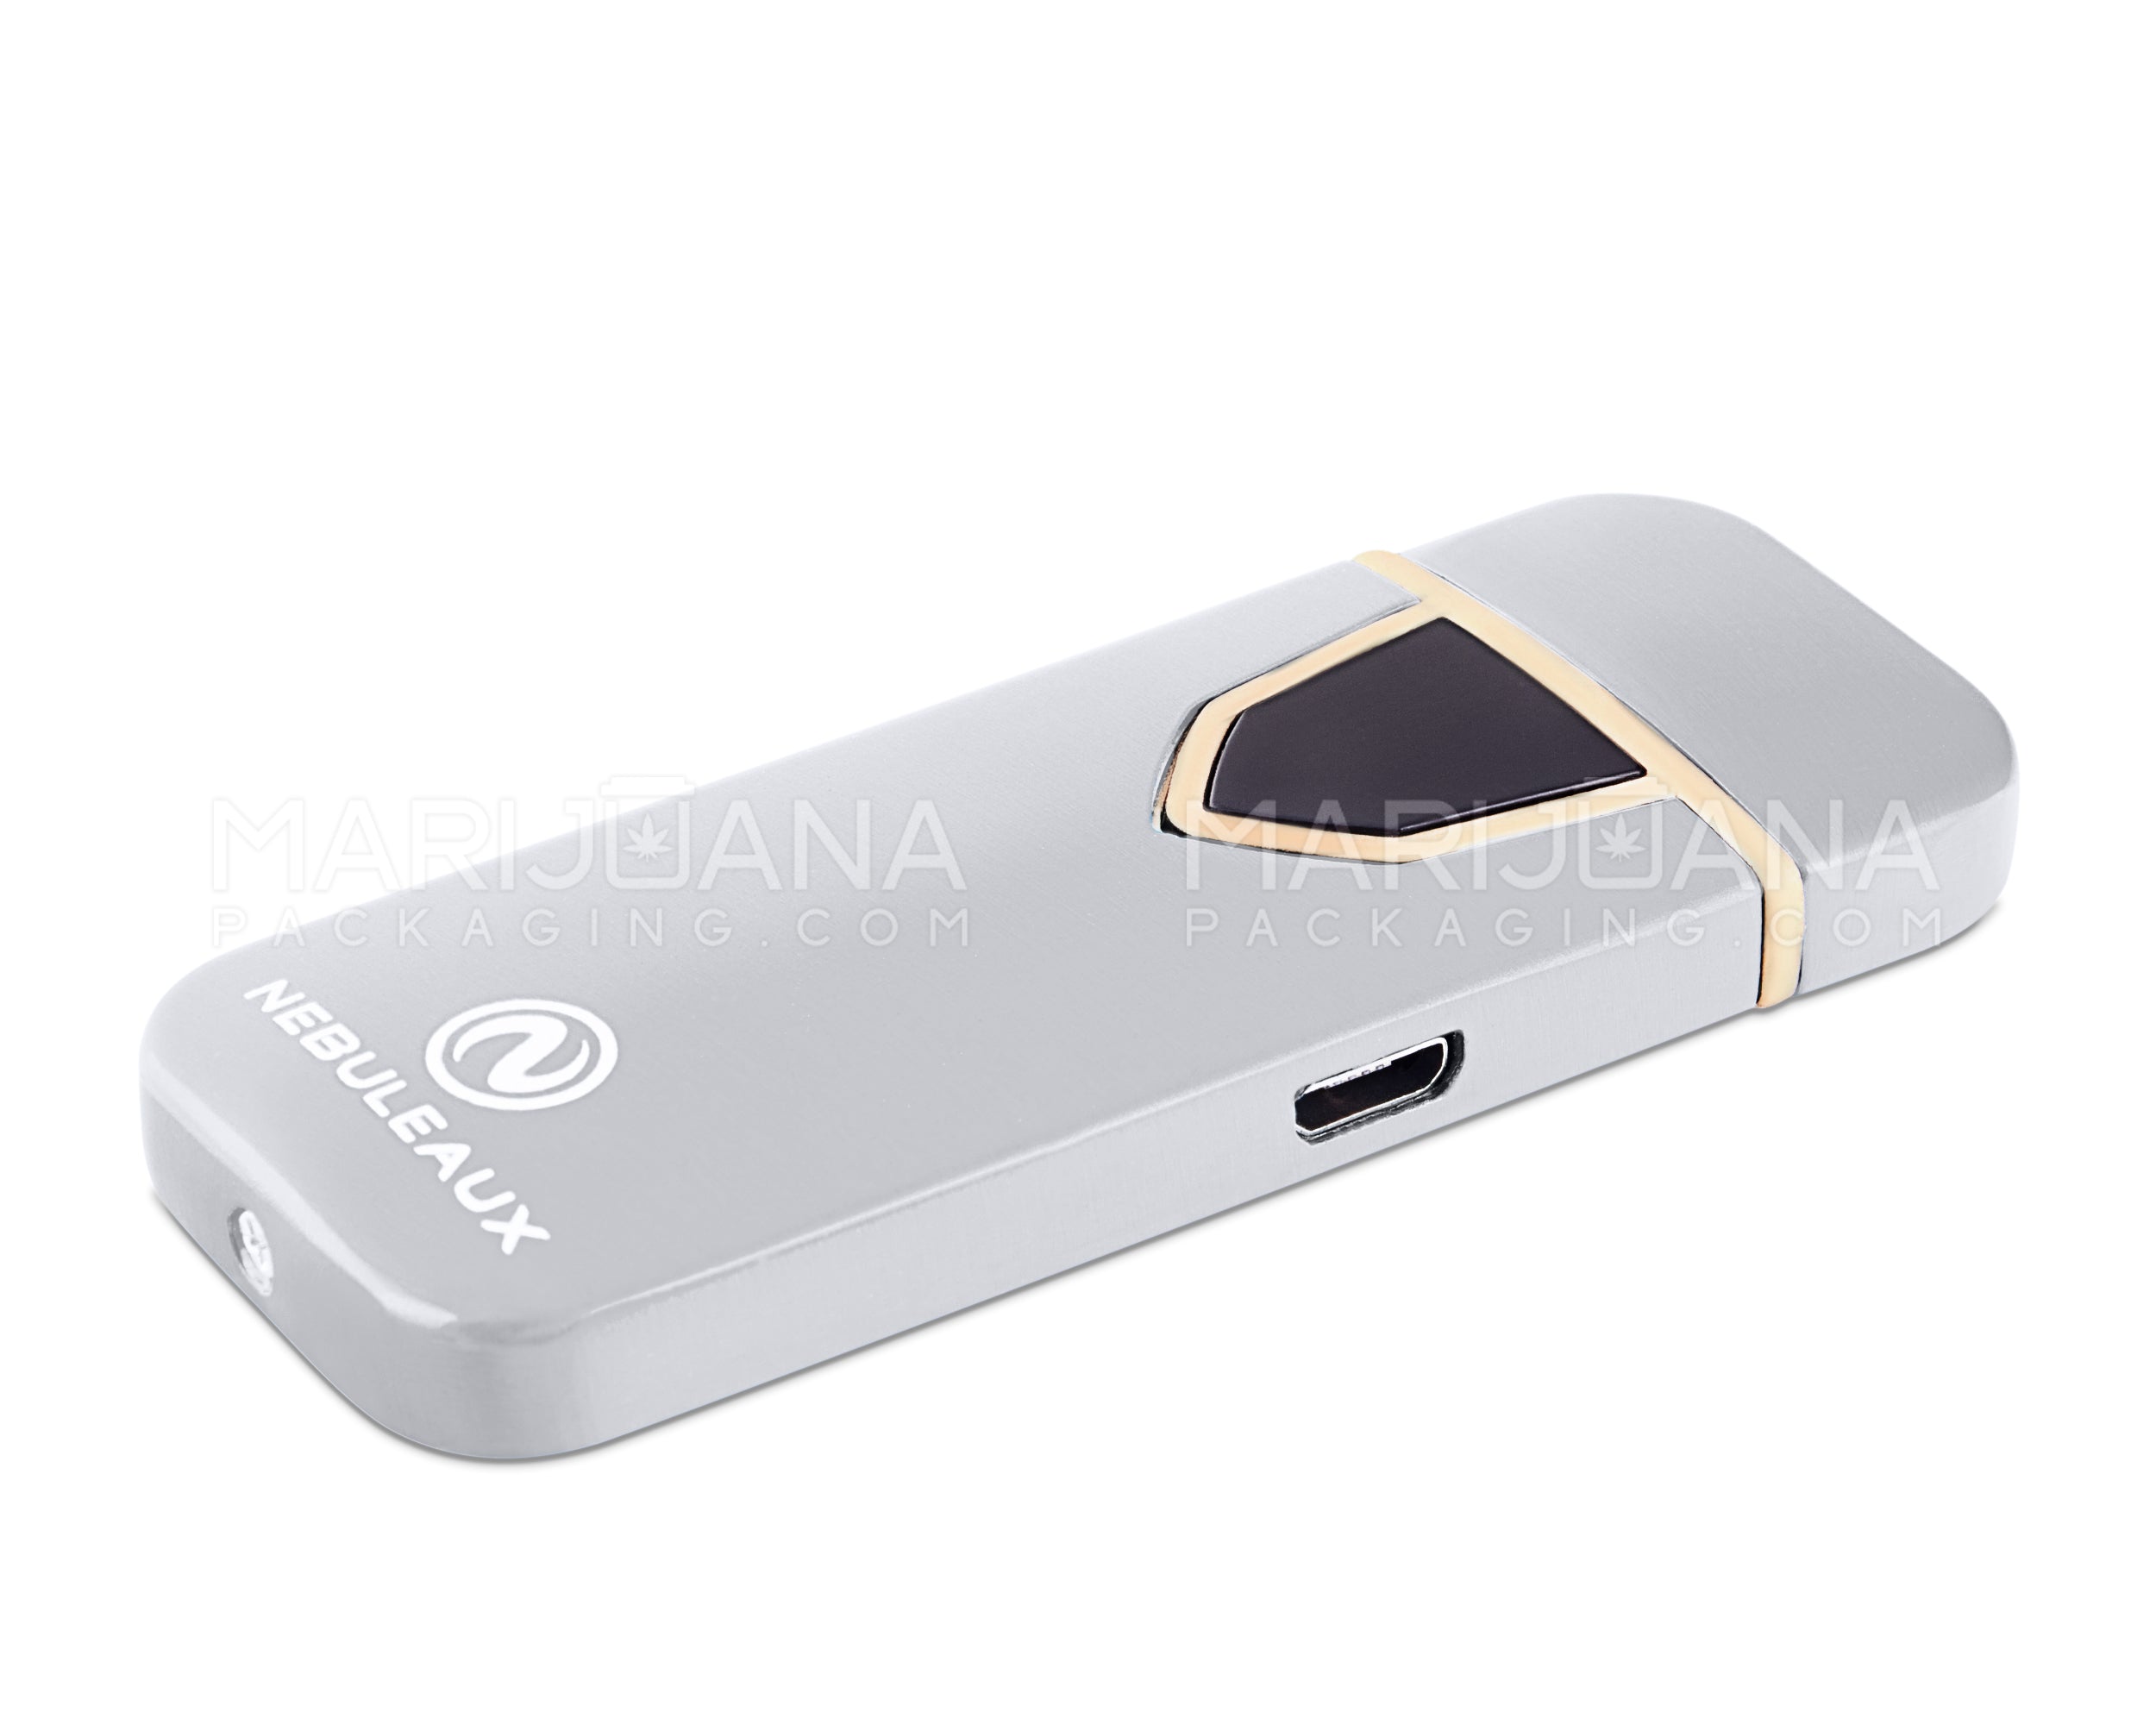 NEBULEAUX | USB Metal Flameless Lighter | 3in Tall - No Butane - Silver